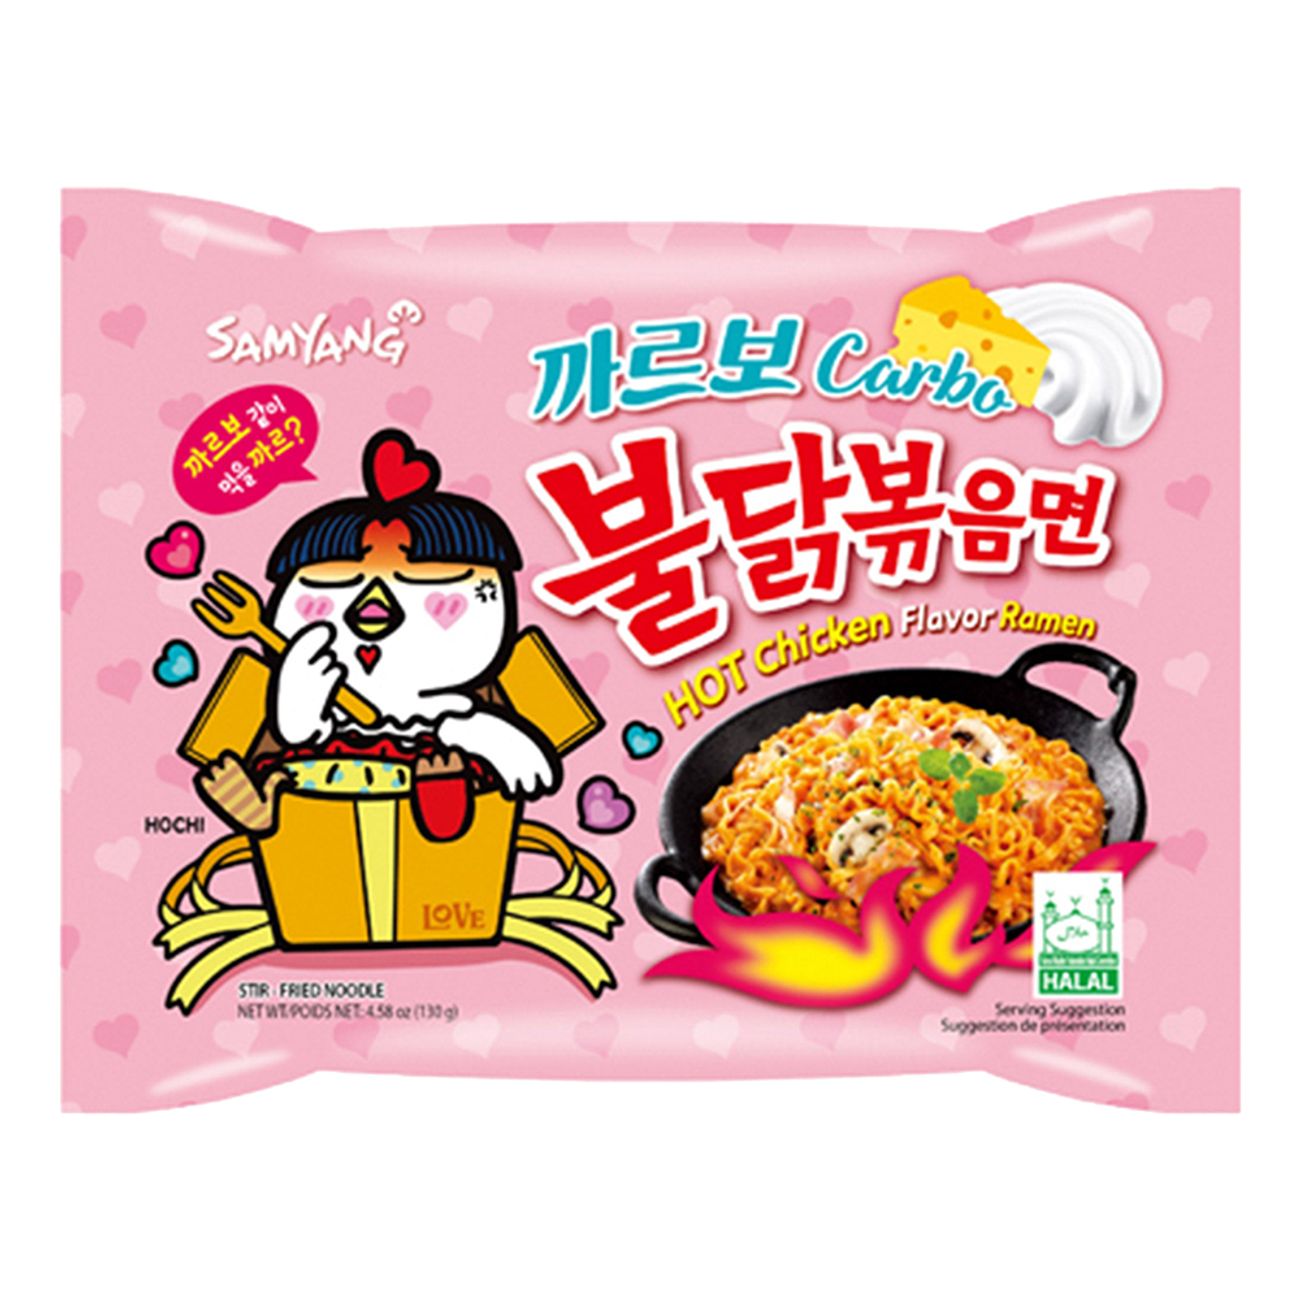 samyang-hot-chicken-ramen-noodles-carbonara-89851-2